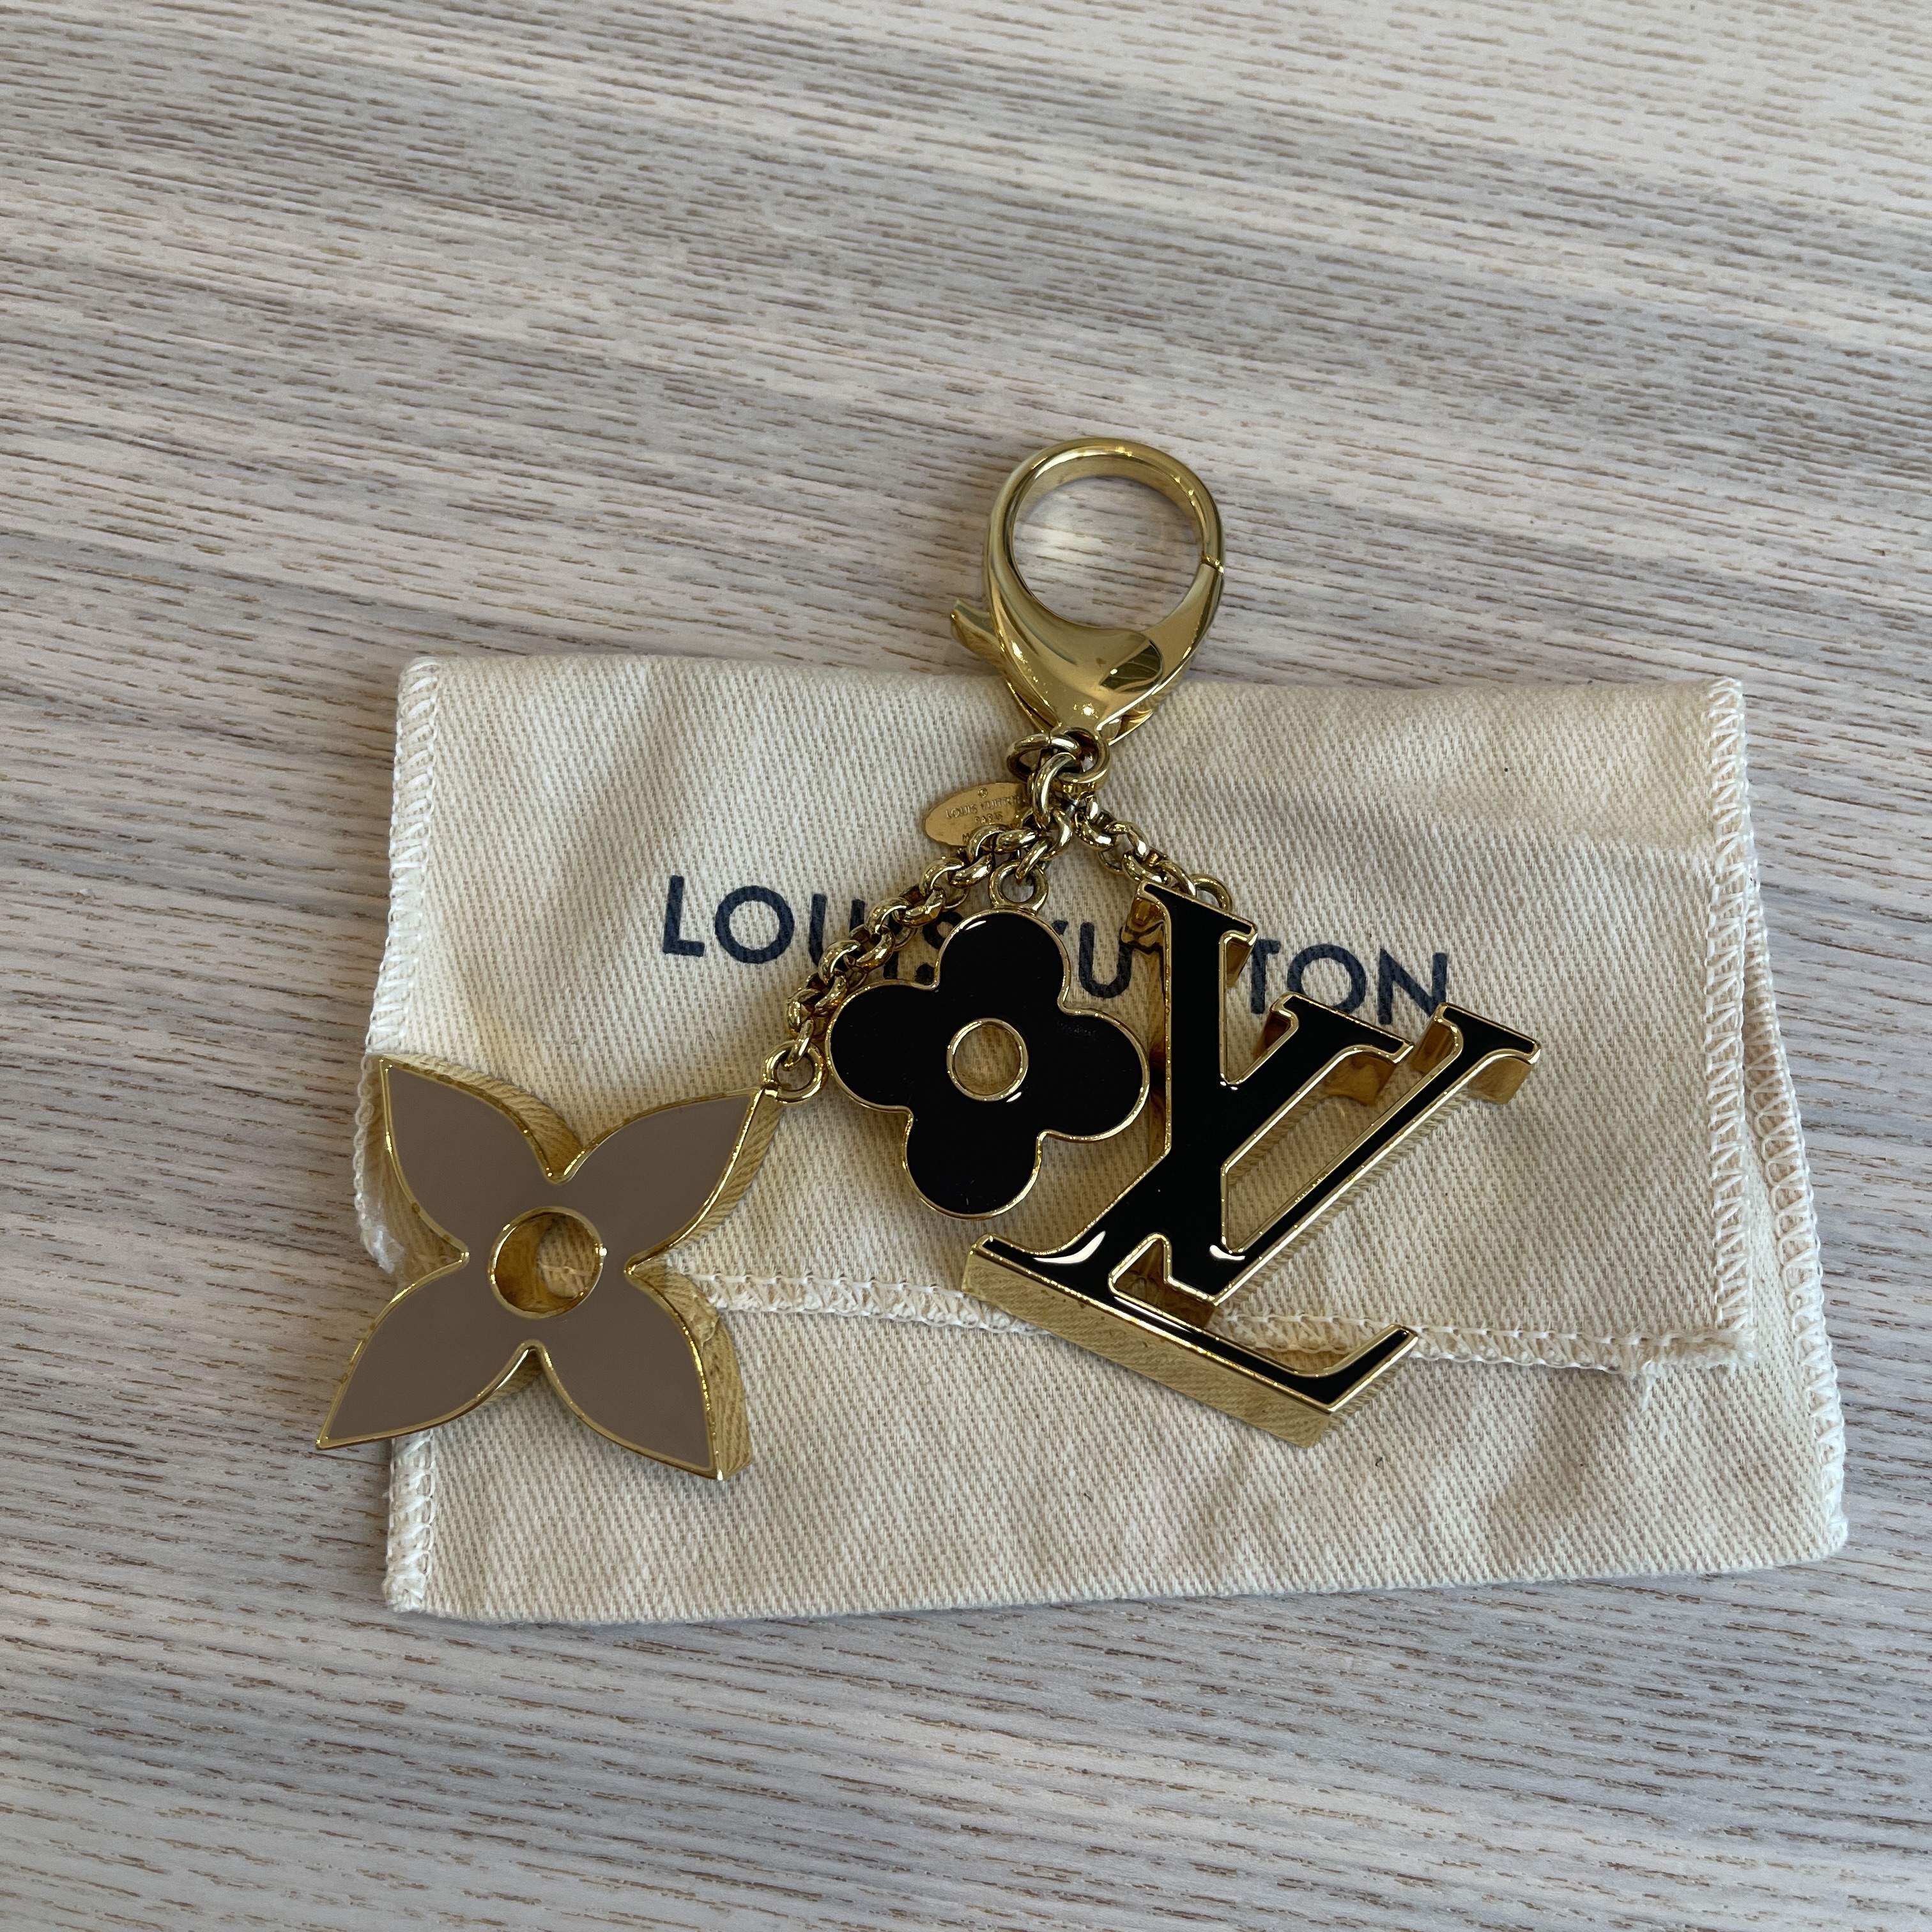 Louis Vuitton Gold Monogram Bag Charm